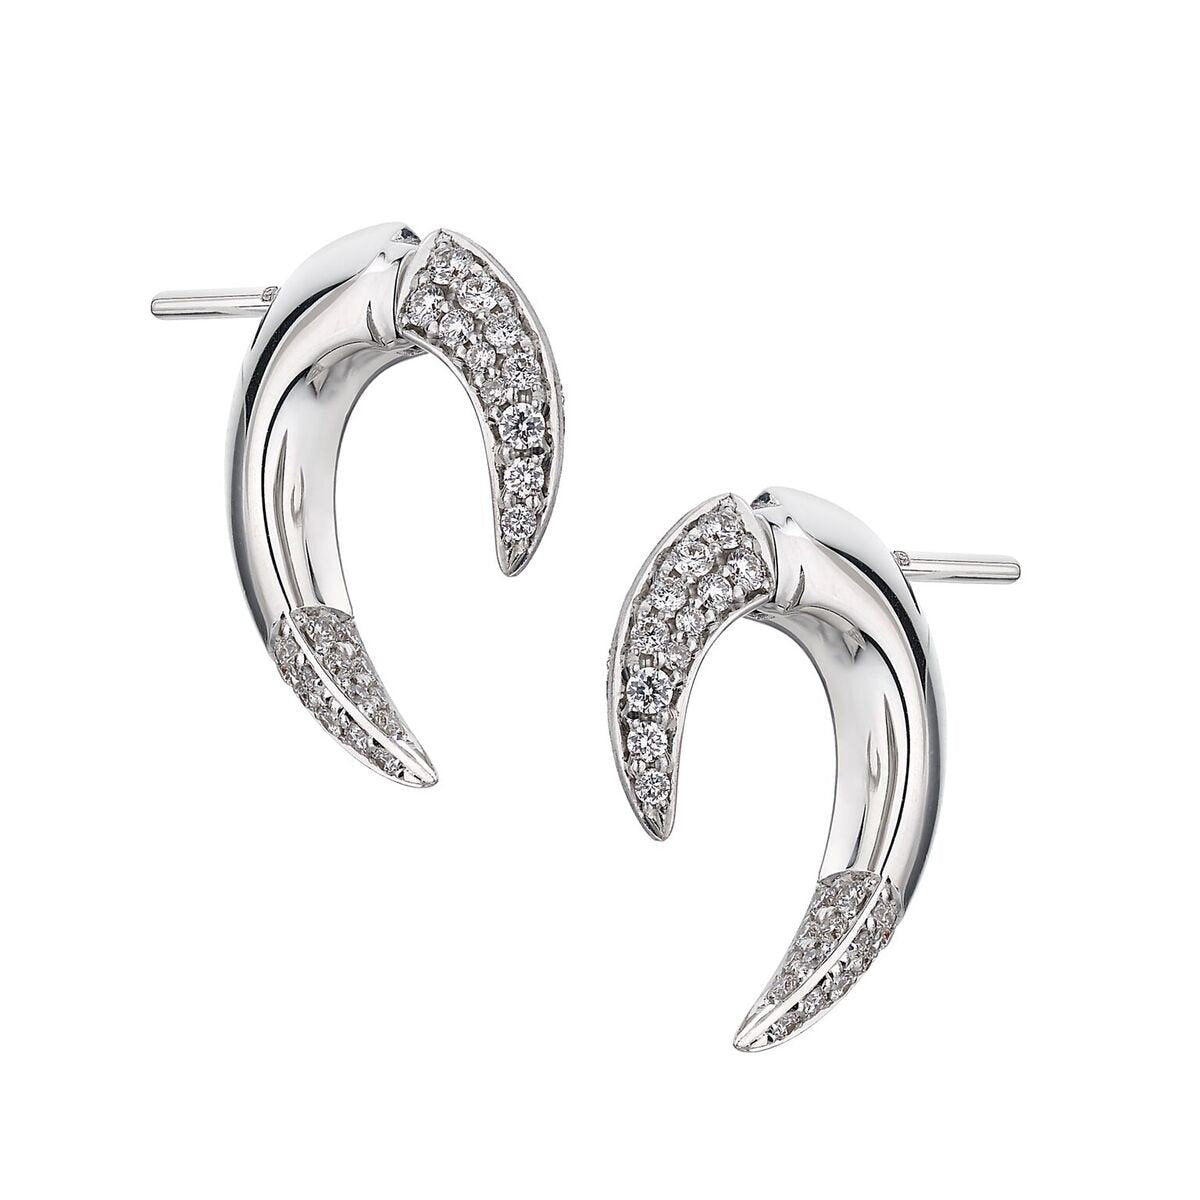 Shaun Leane Talon 18ct White Gold 0.48ct Diamond Earrings